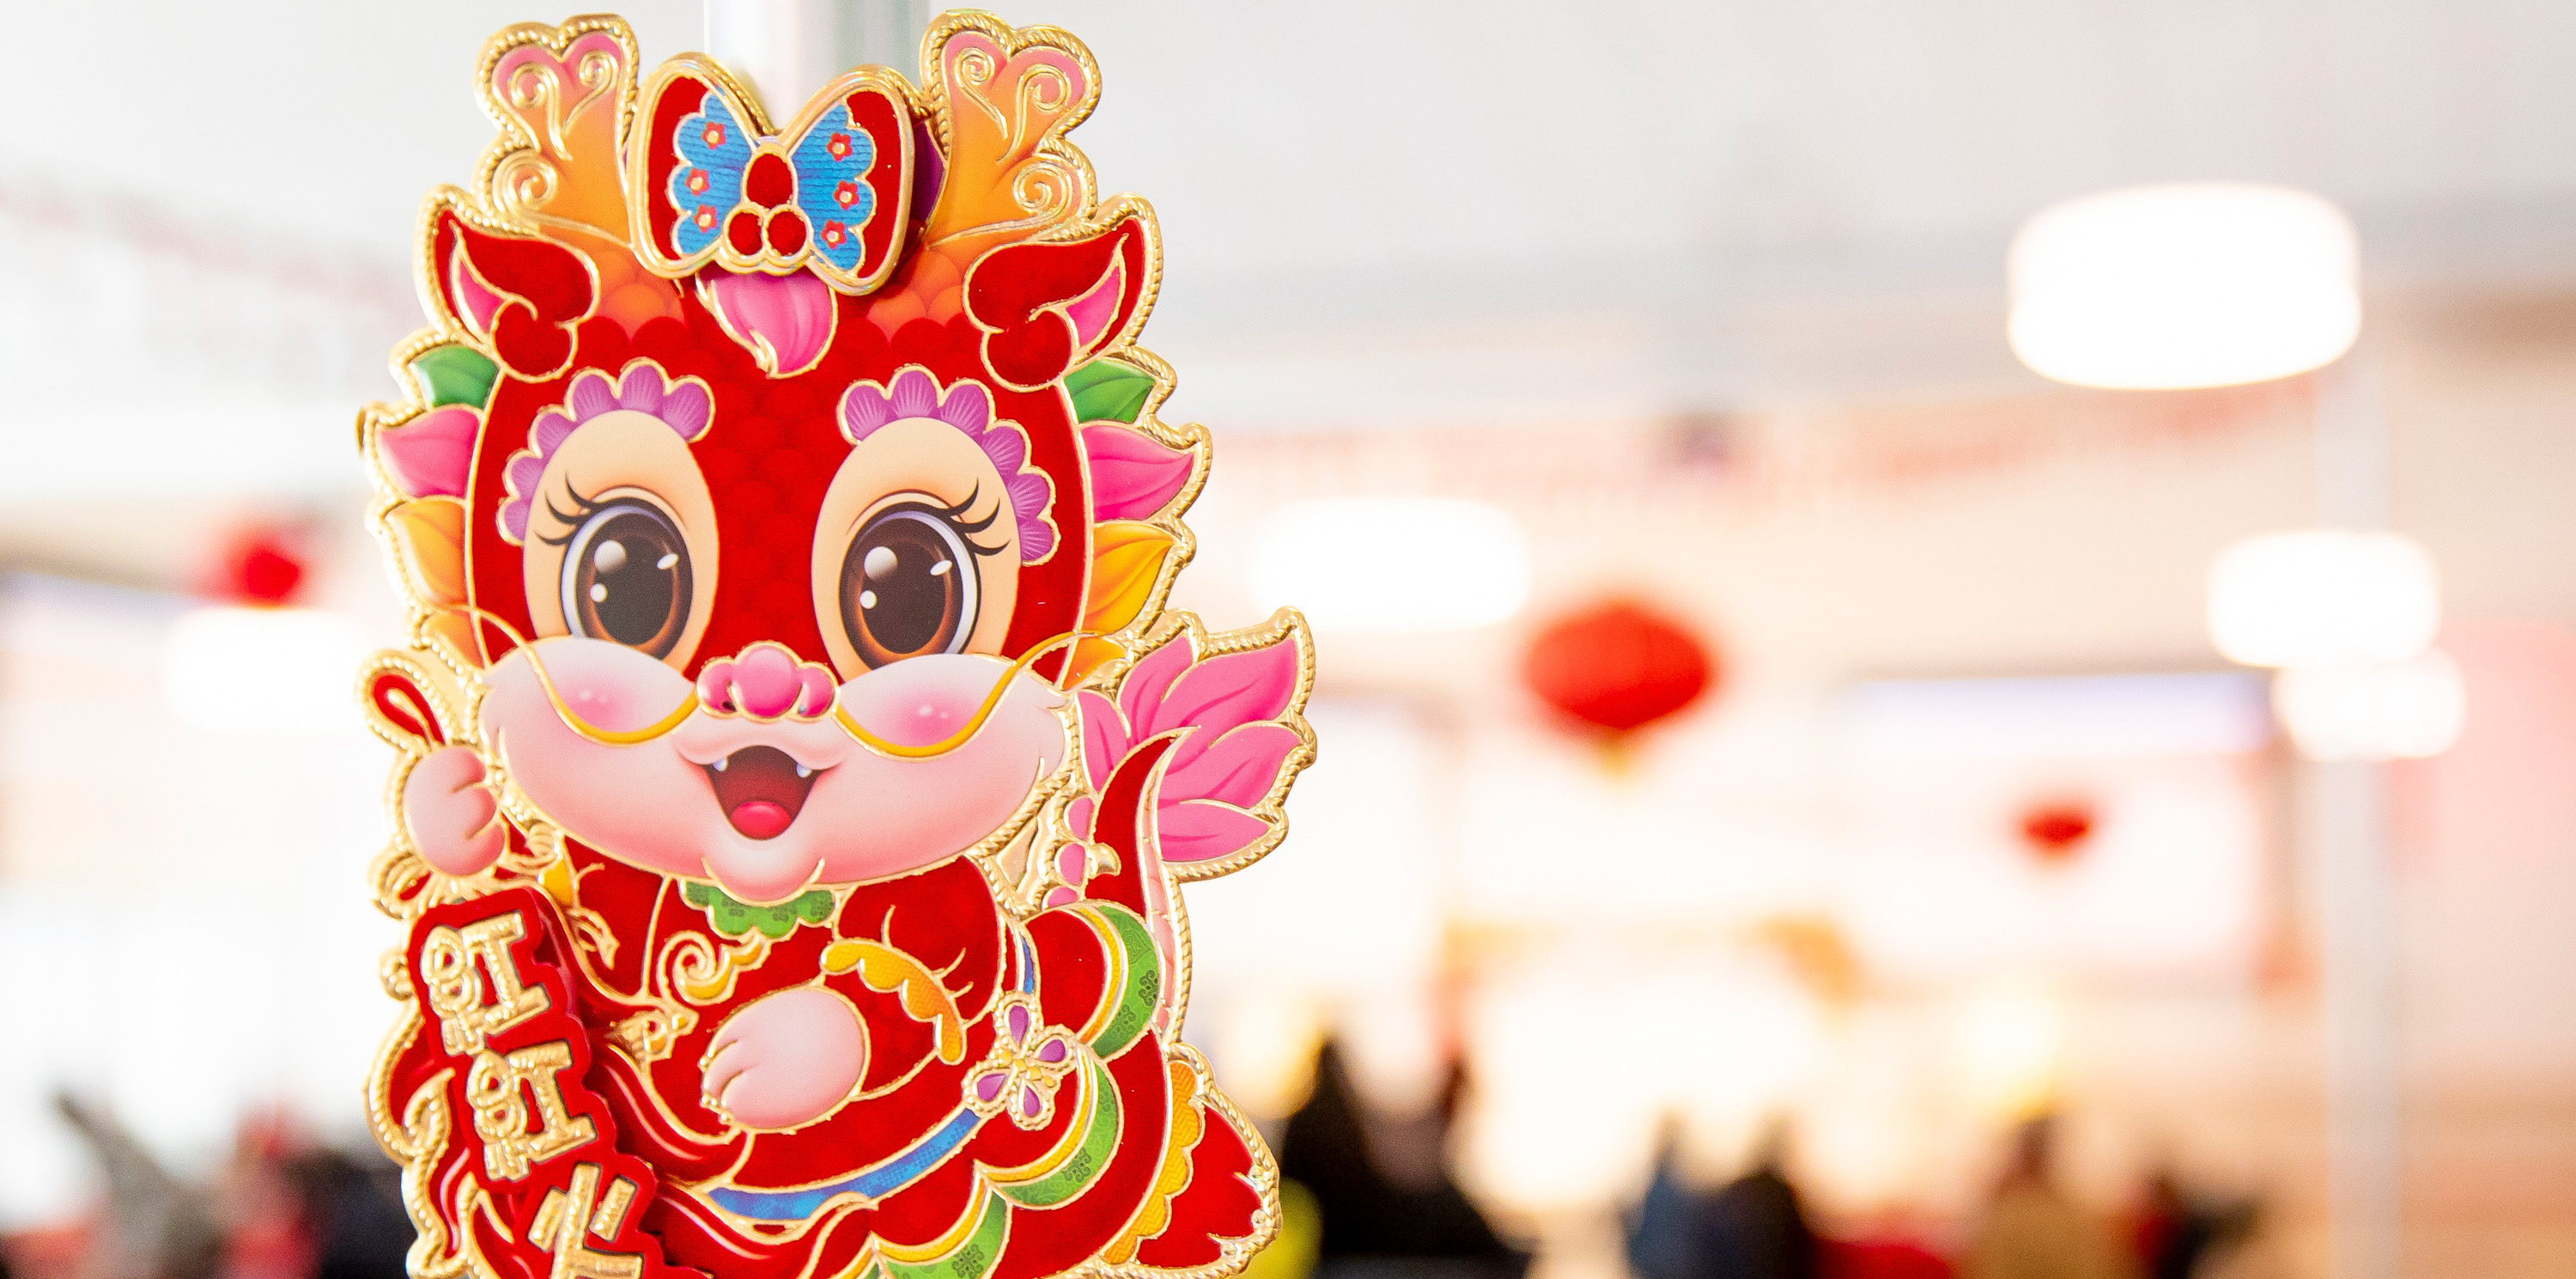 Decoration for Lunar New Year celebration